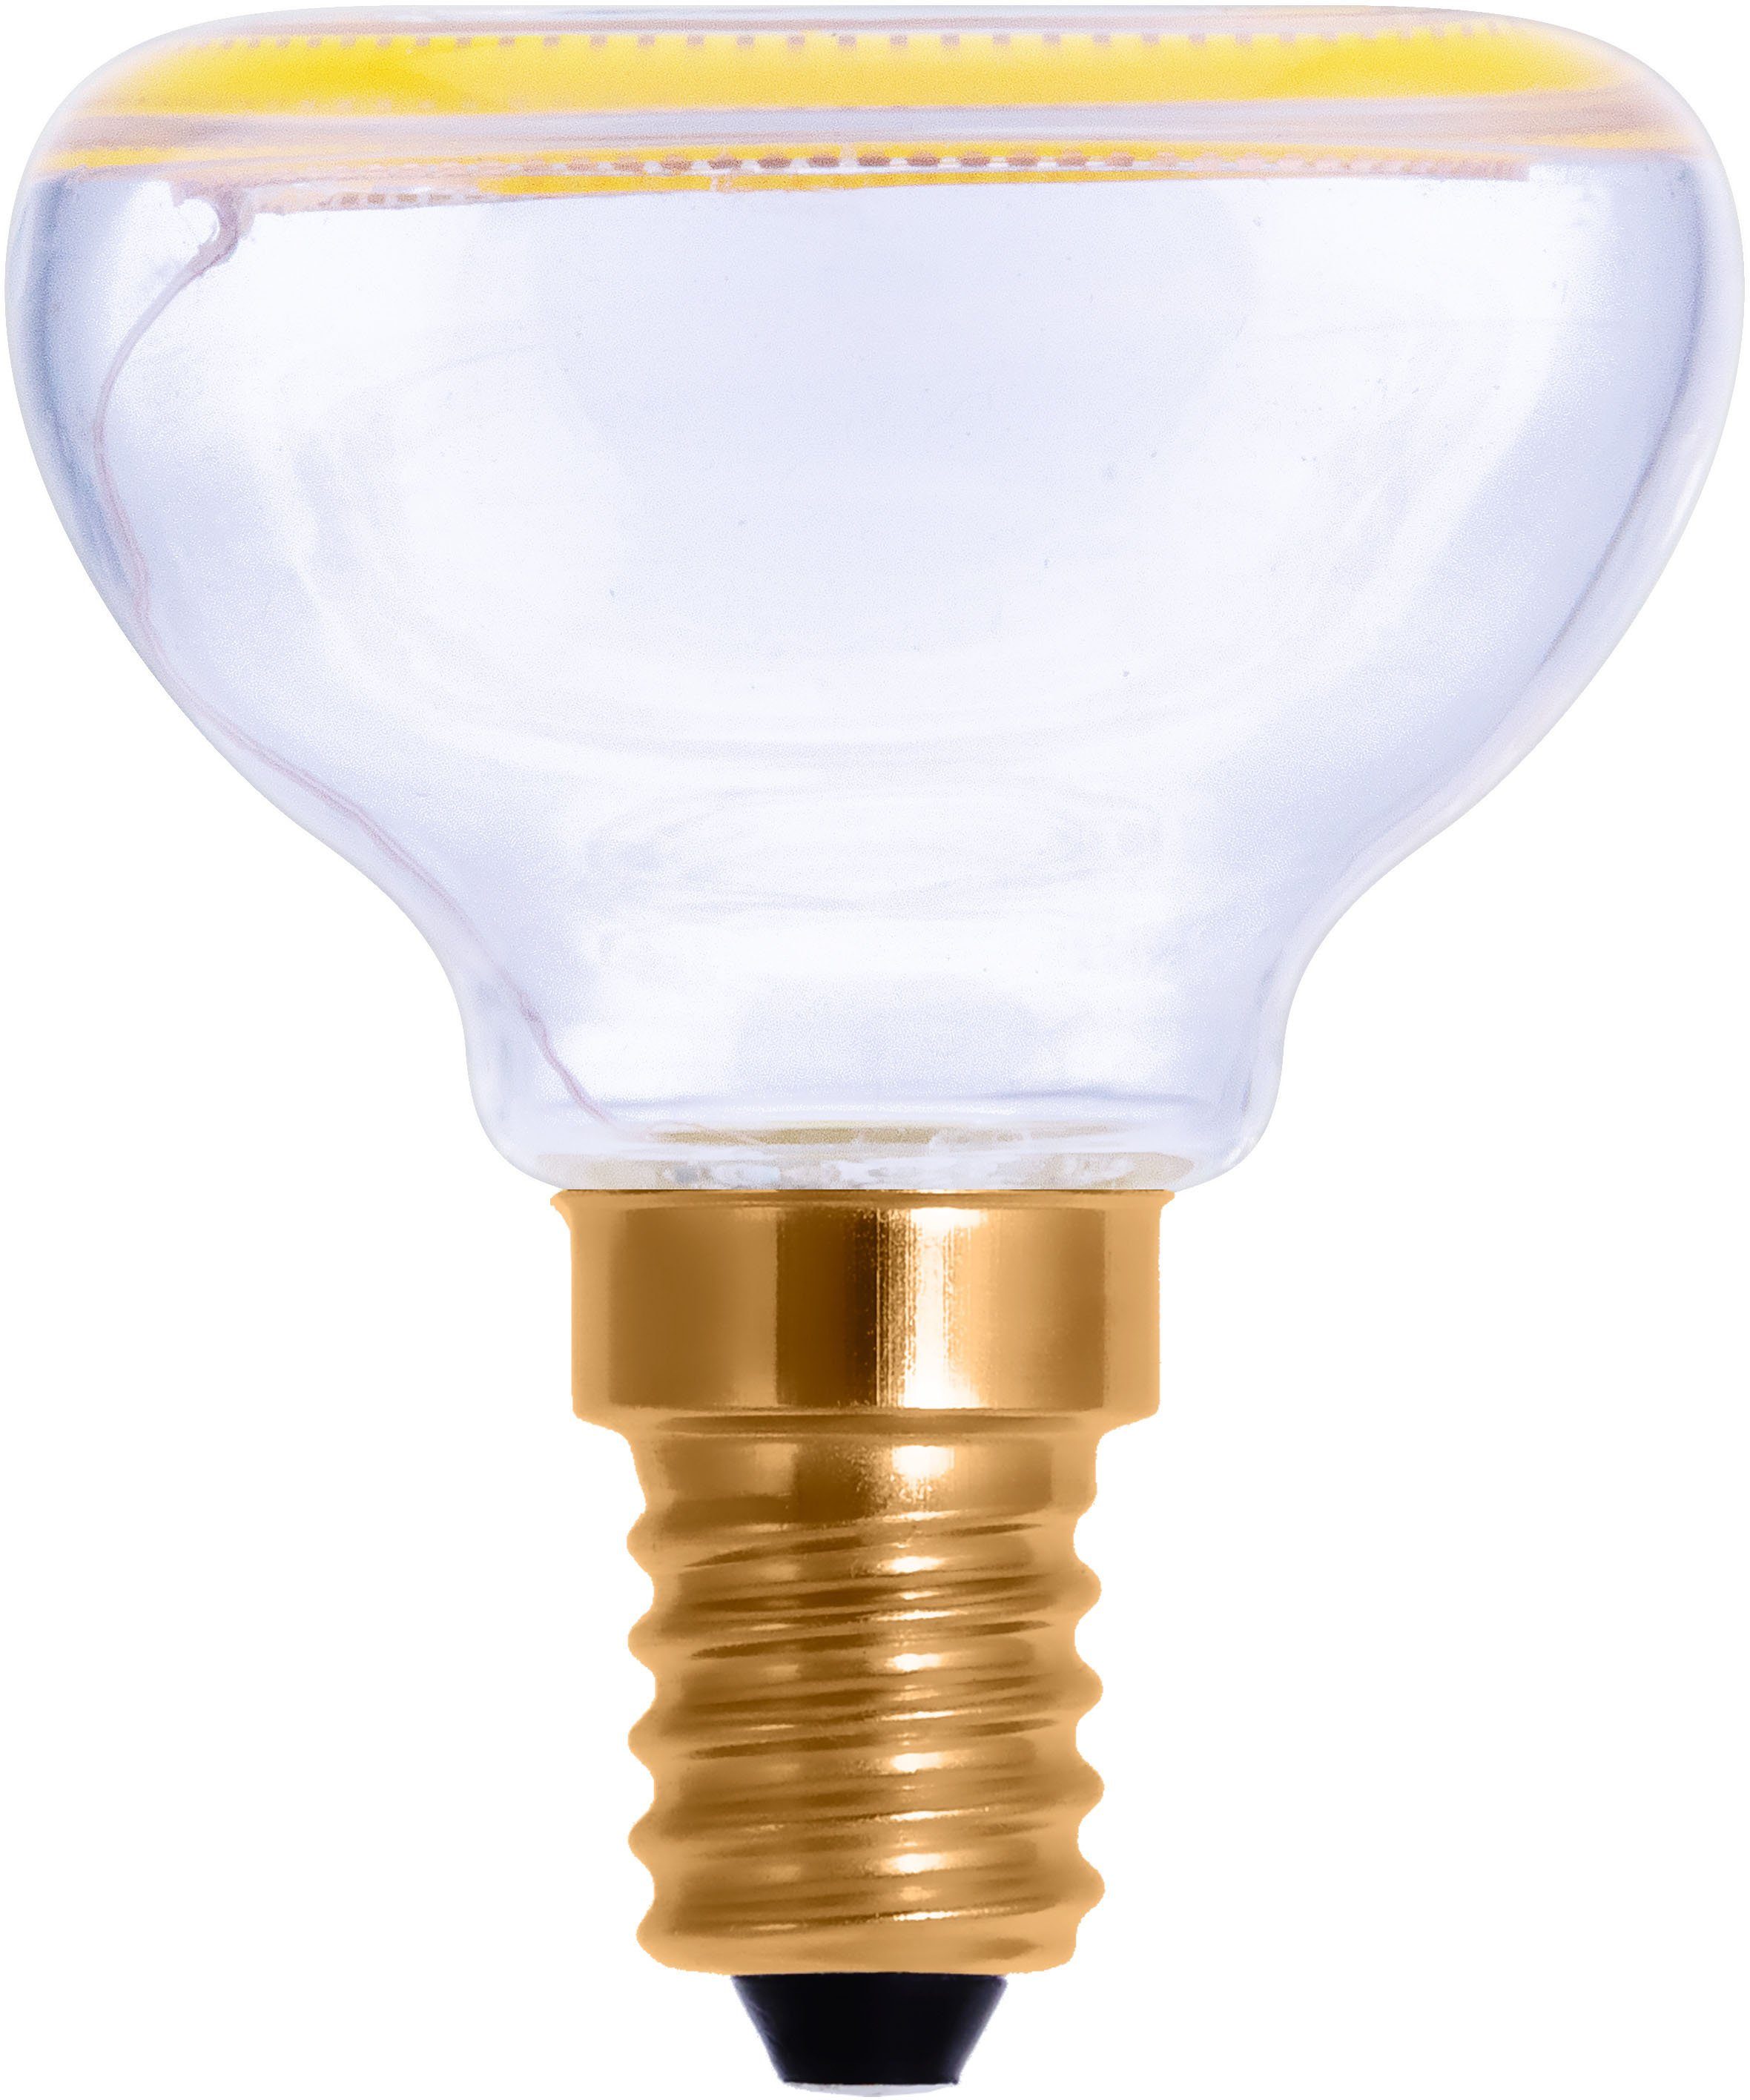 SEGULA LED-Leuchtmittel LED Floating Reflektor R50 klar, E14, Warmweiß, dimmbar, E14, Floating Reflektor R50 klar